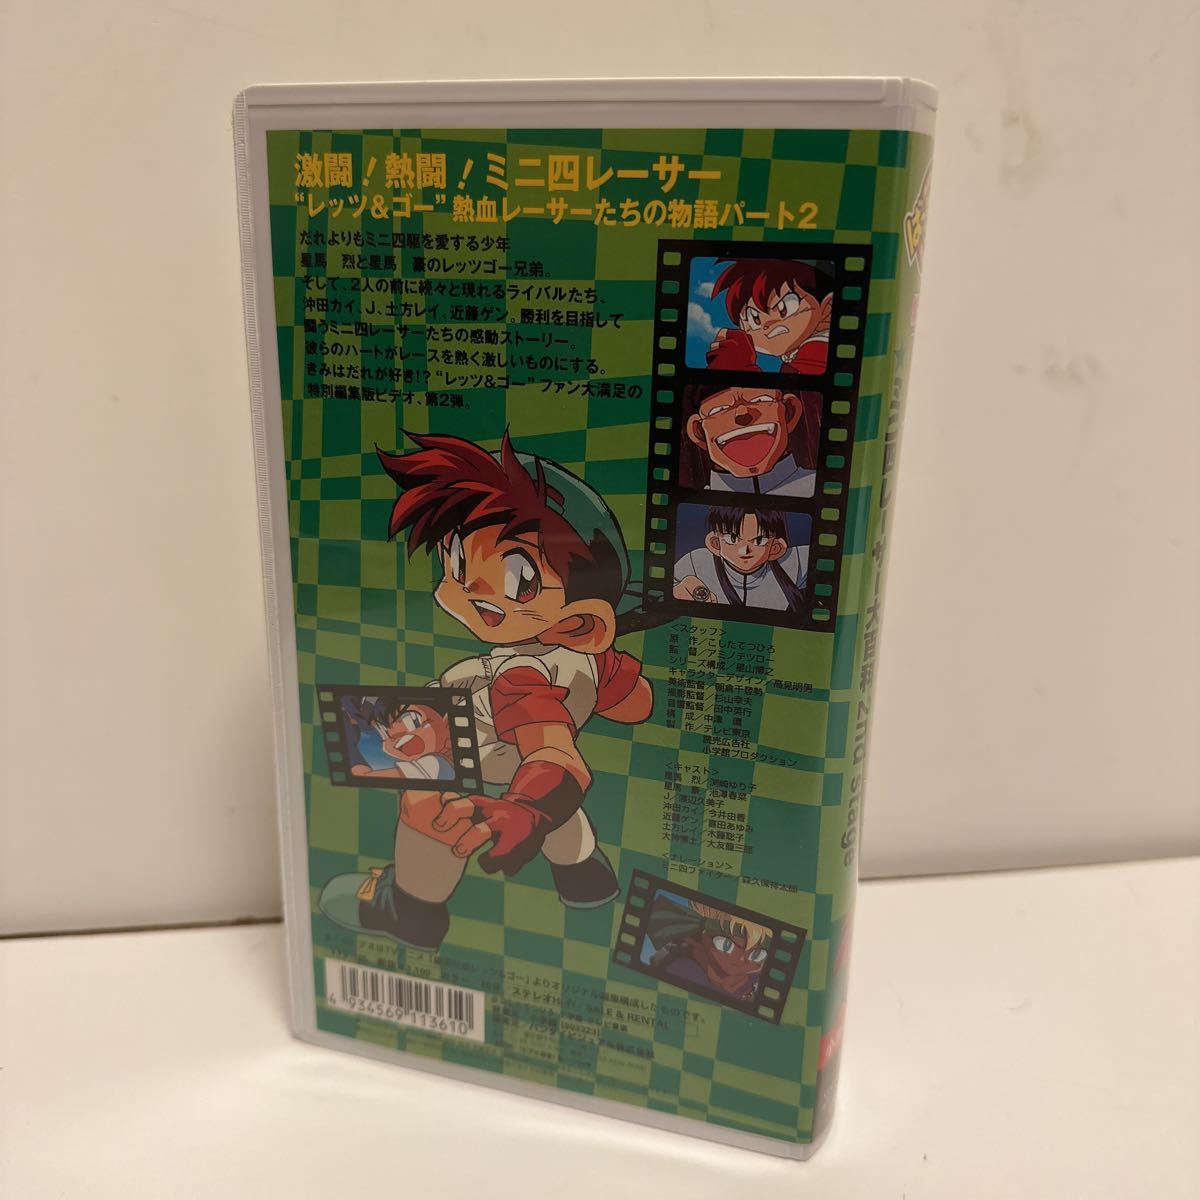 * rare * rare * Bakusou Kyoudai Let's & Go special editing version 3 volume [VHS]